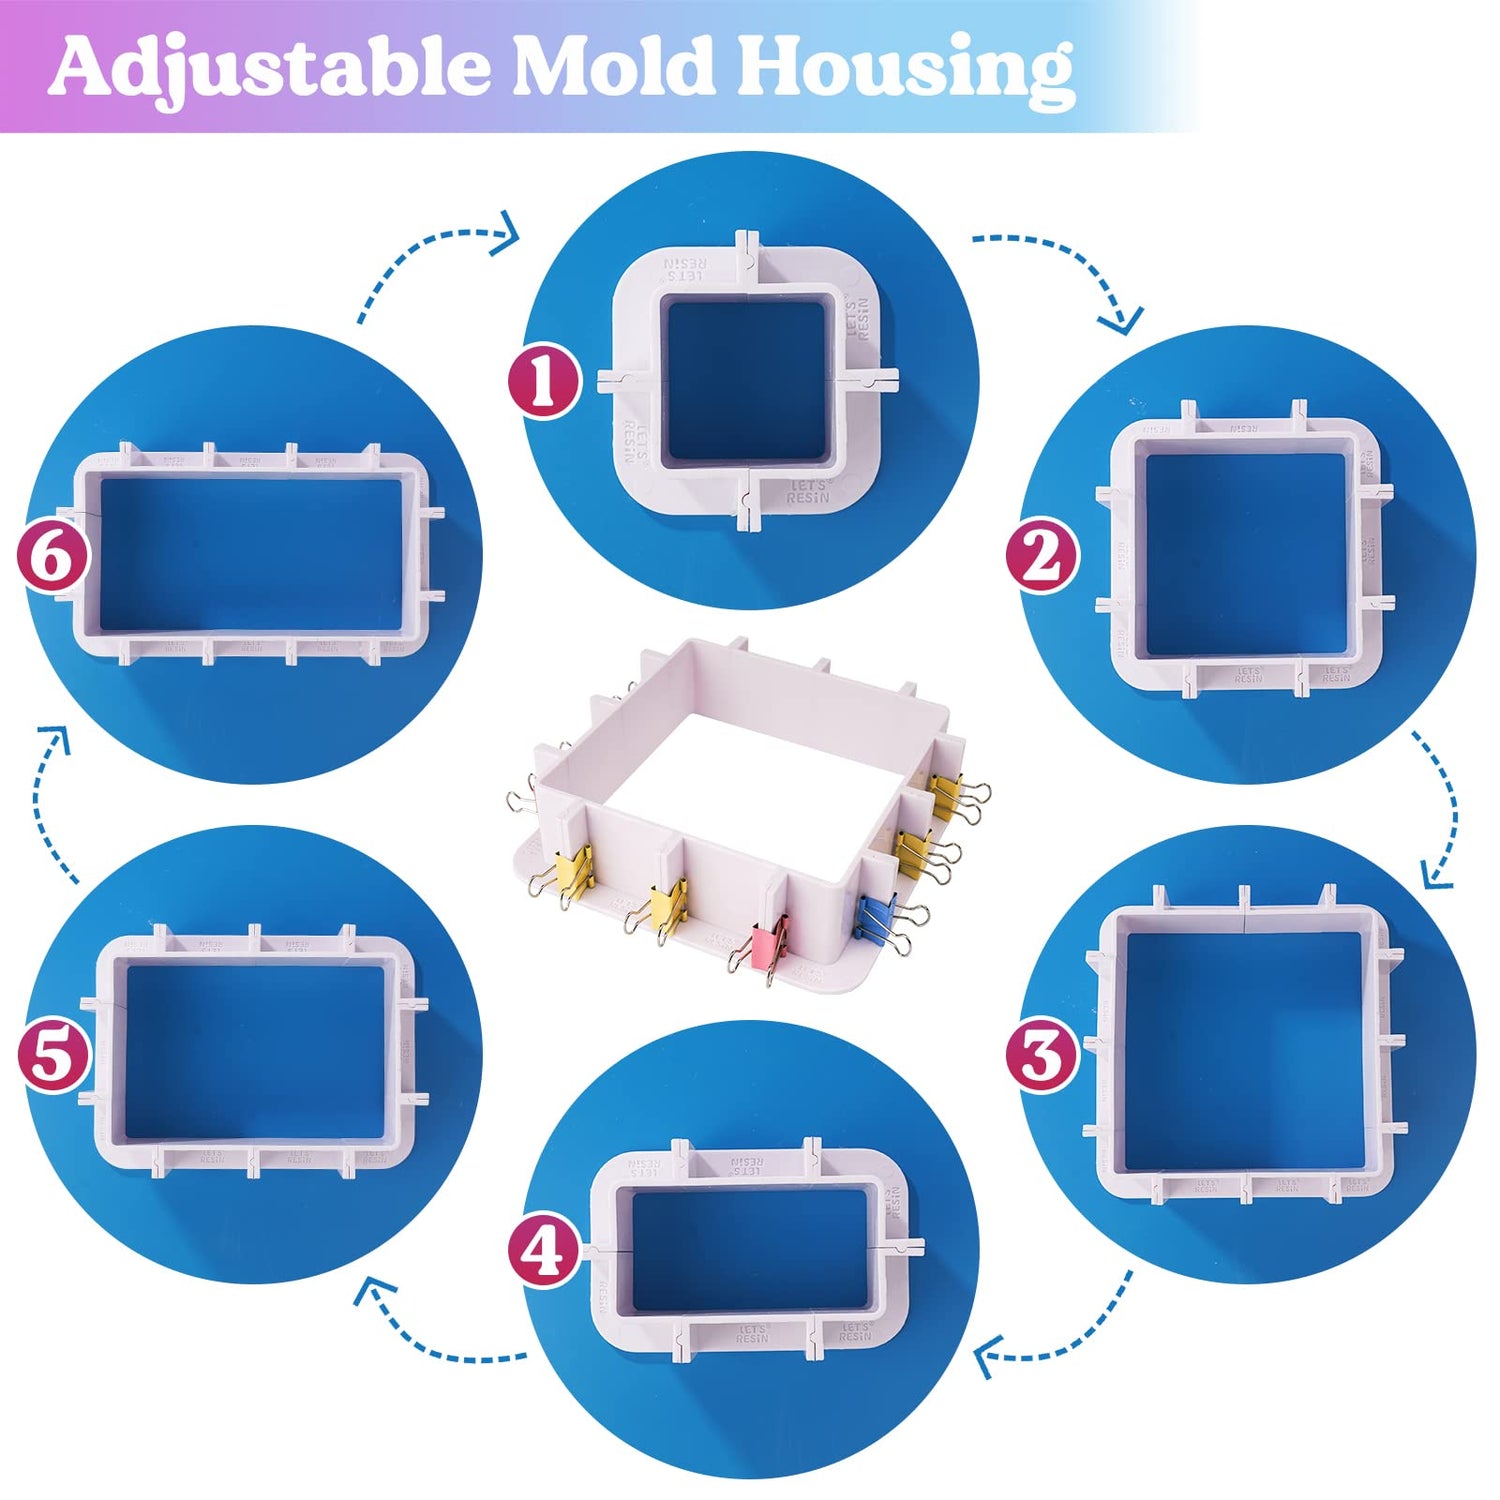 Adjustable Mold Housing